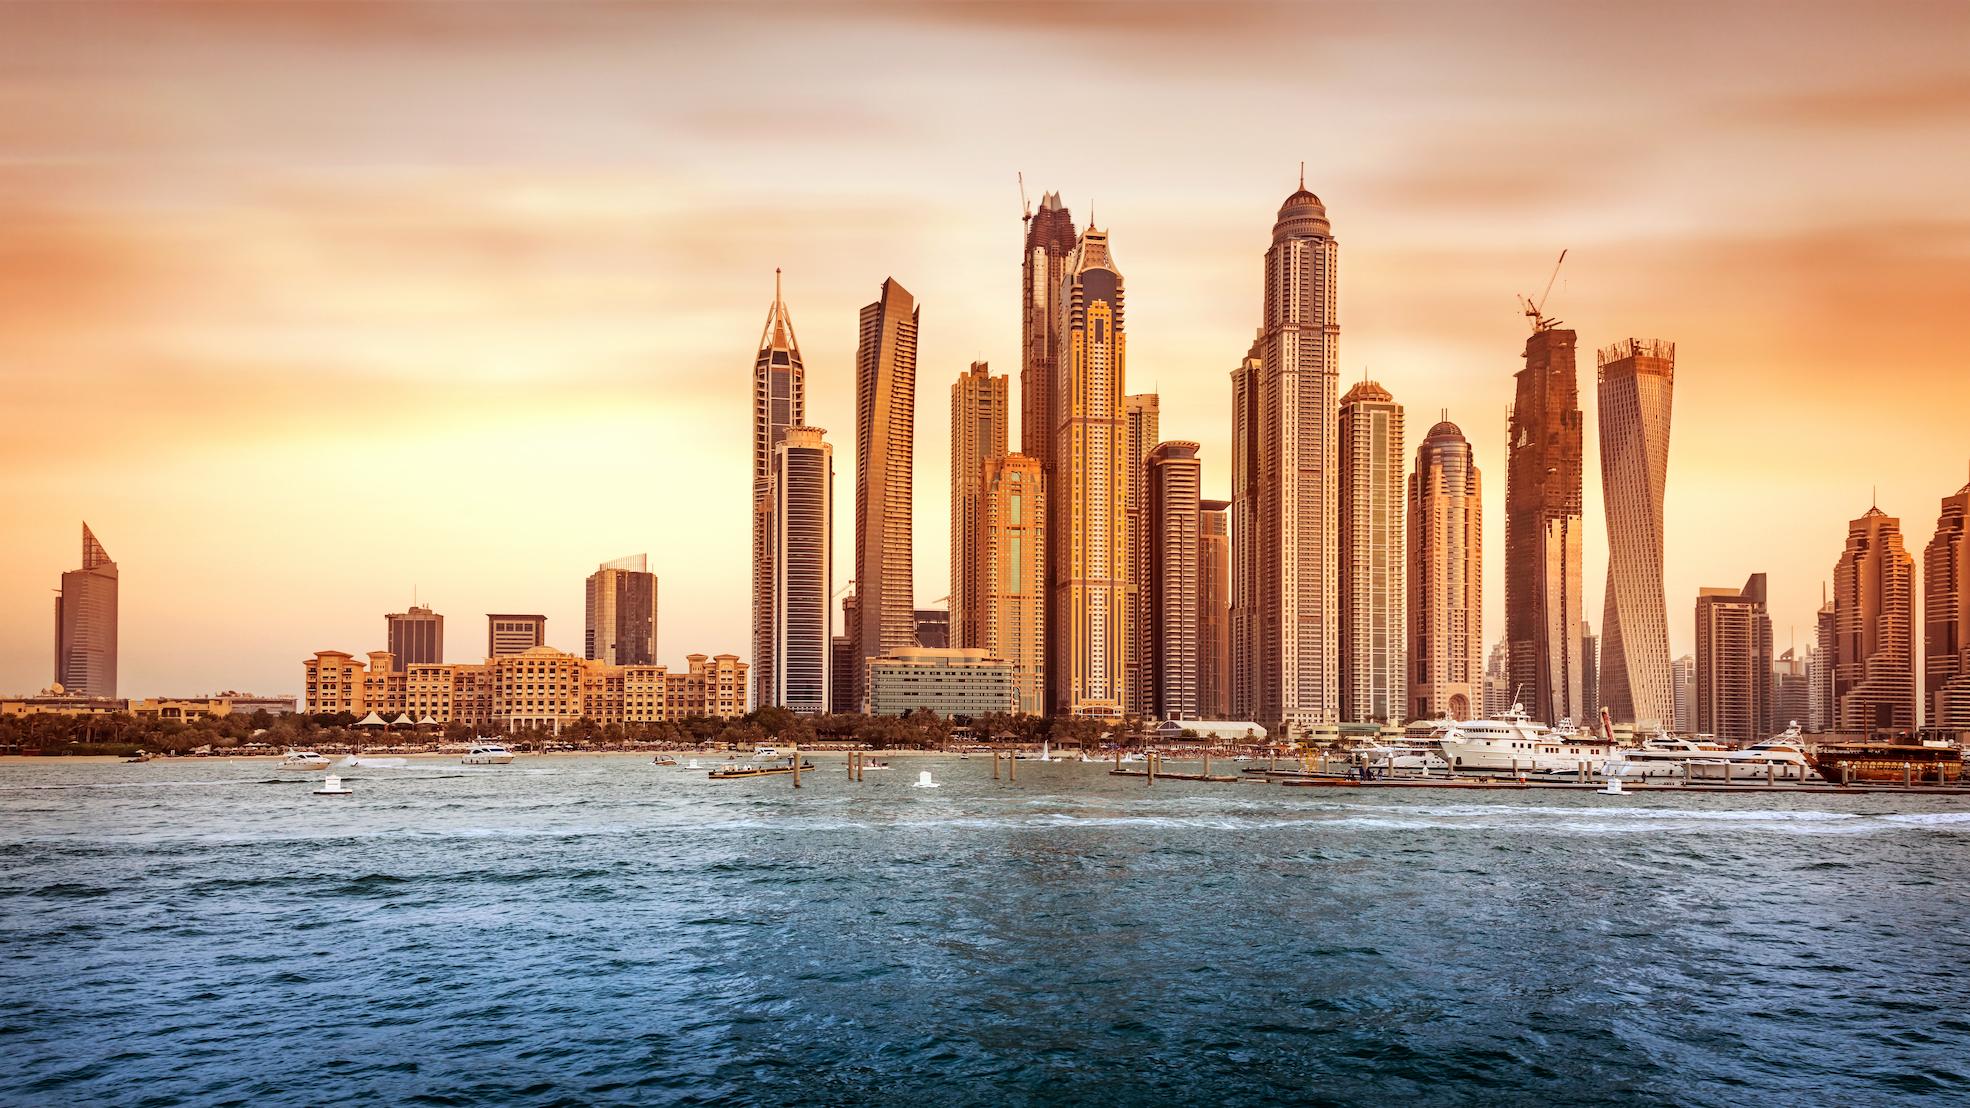 An image of Dubai city.